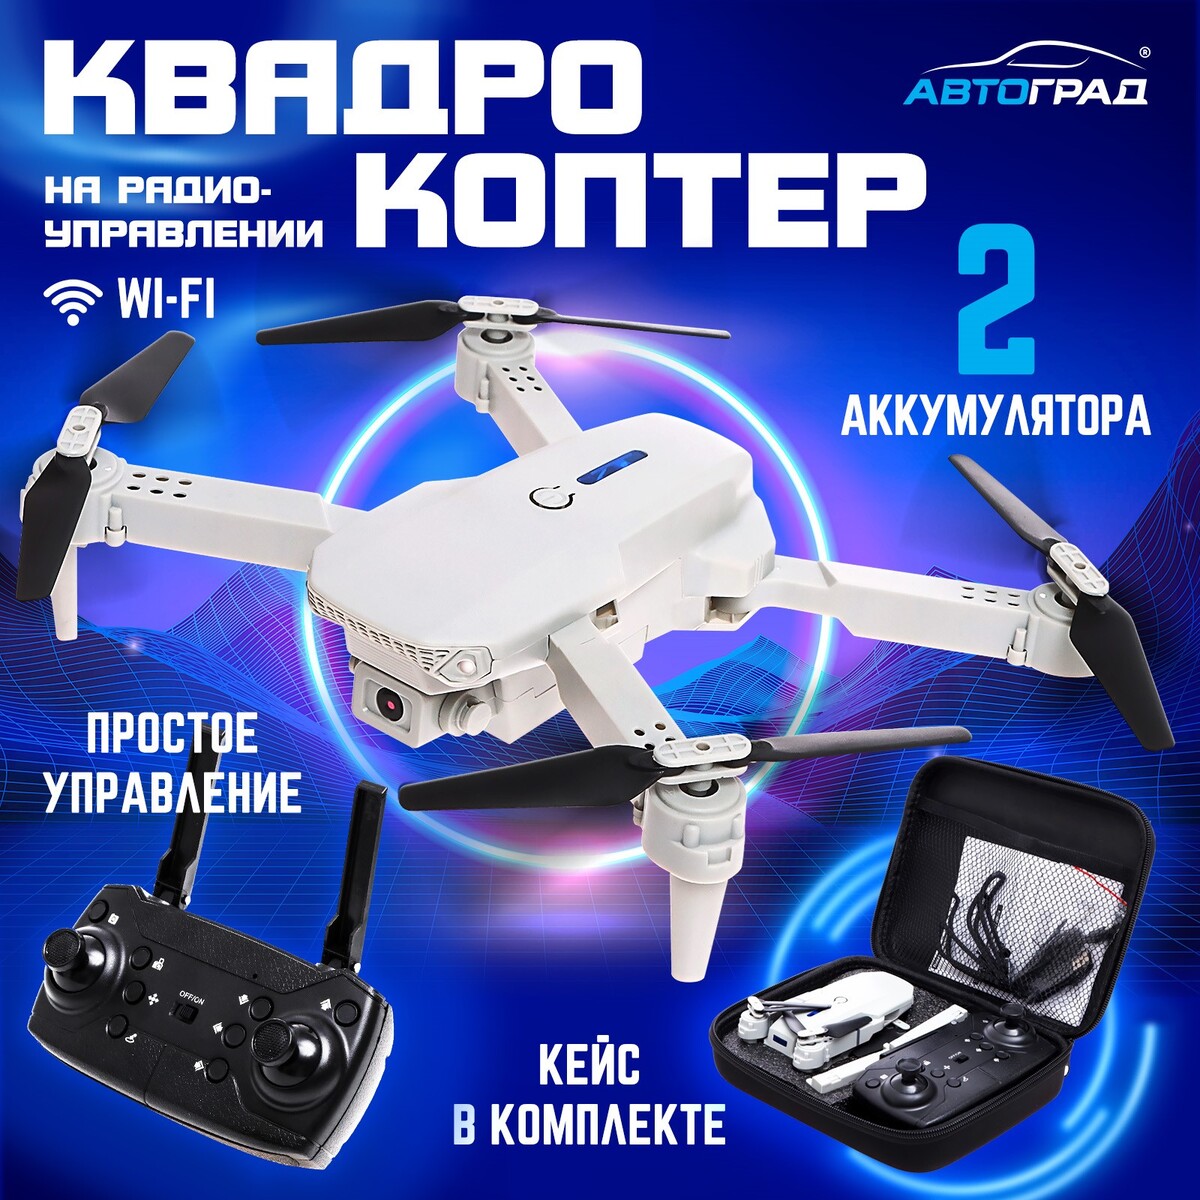 Квадрокоптер на радиоуправлении flydrone, камера 1080p, барометр, wi-fi, 2 аккумулятора, цвет серый Автоград